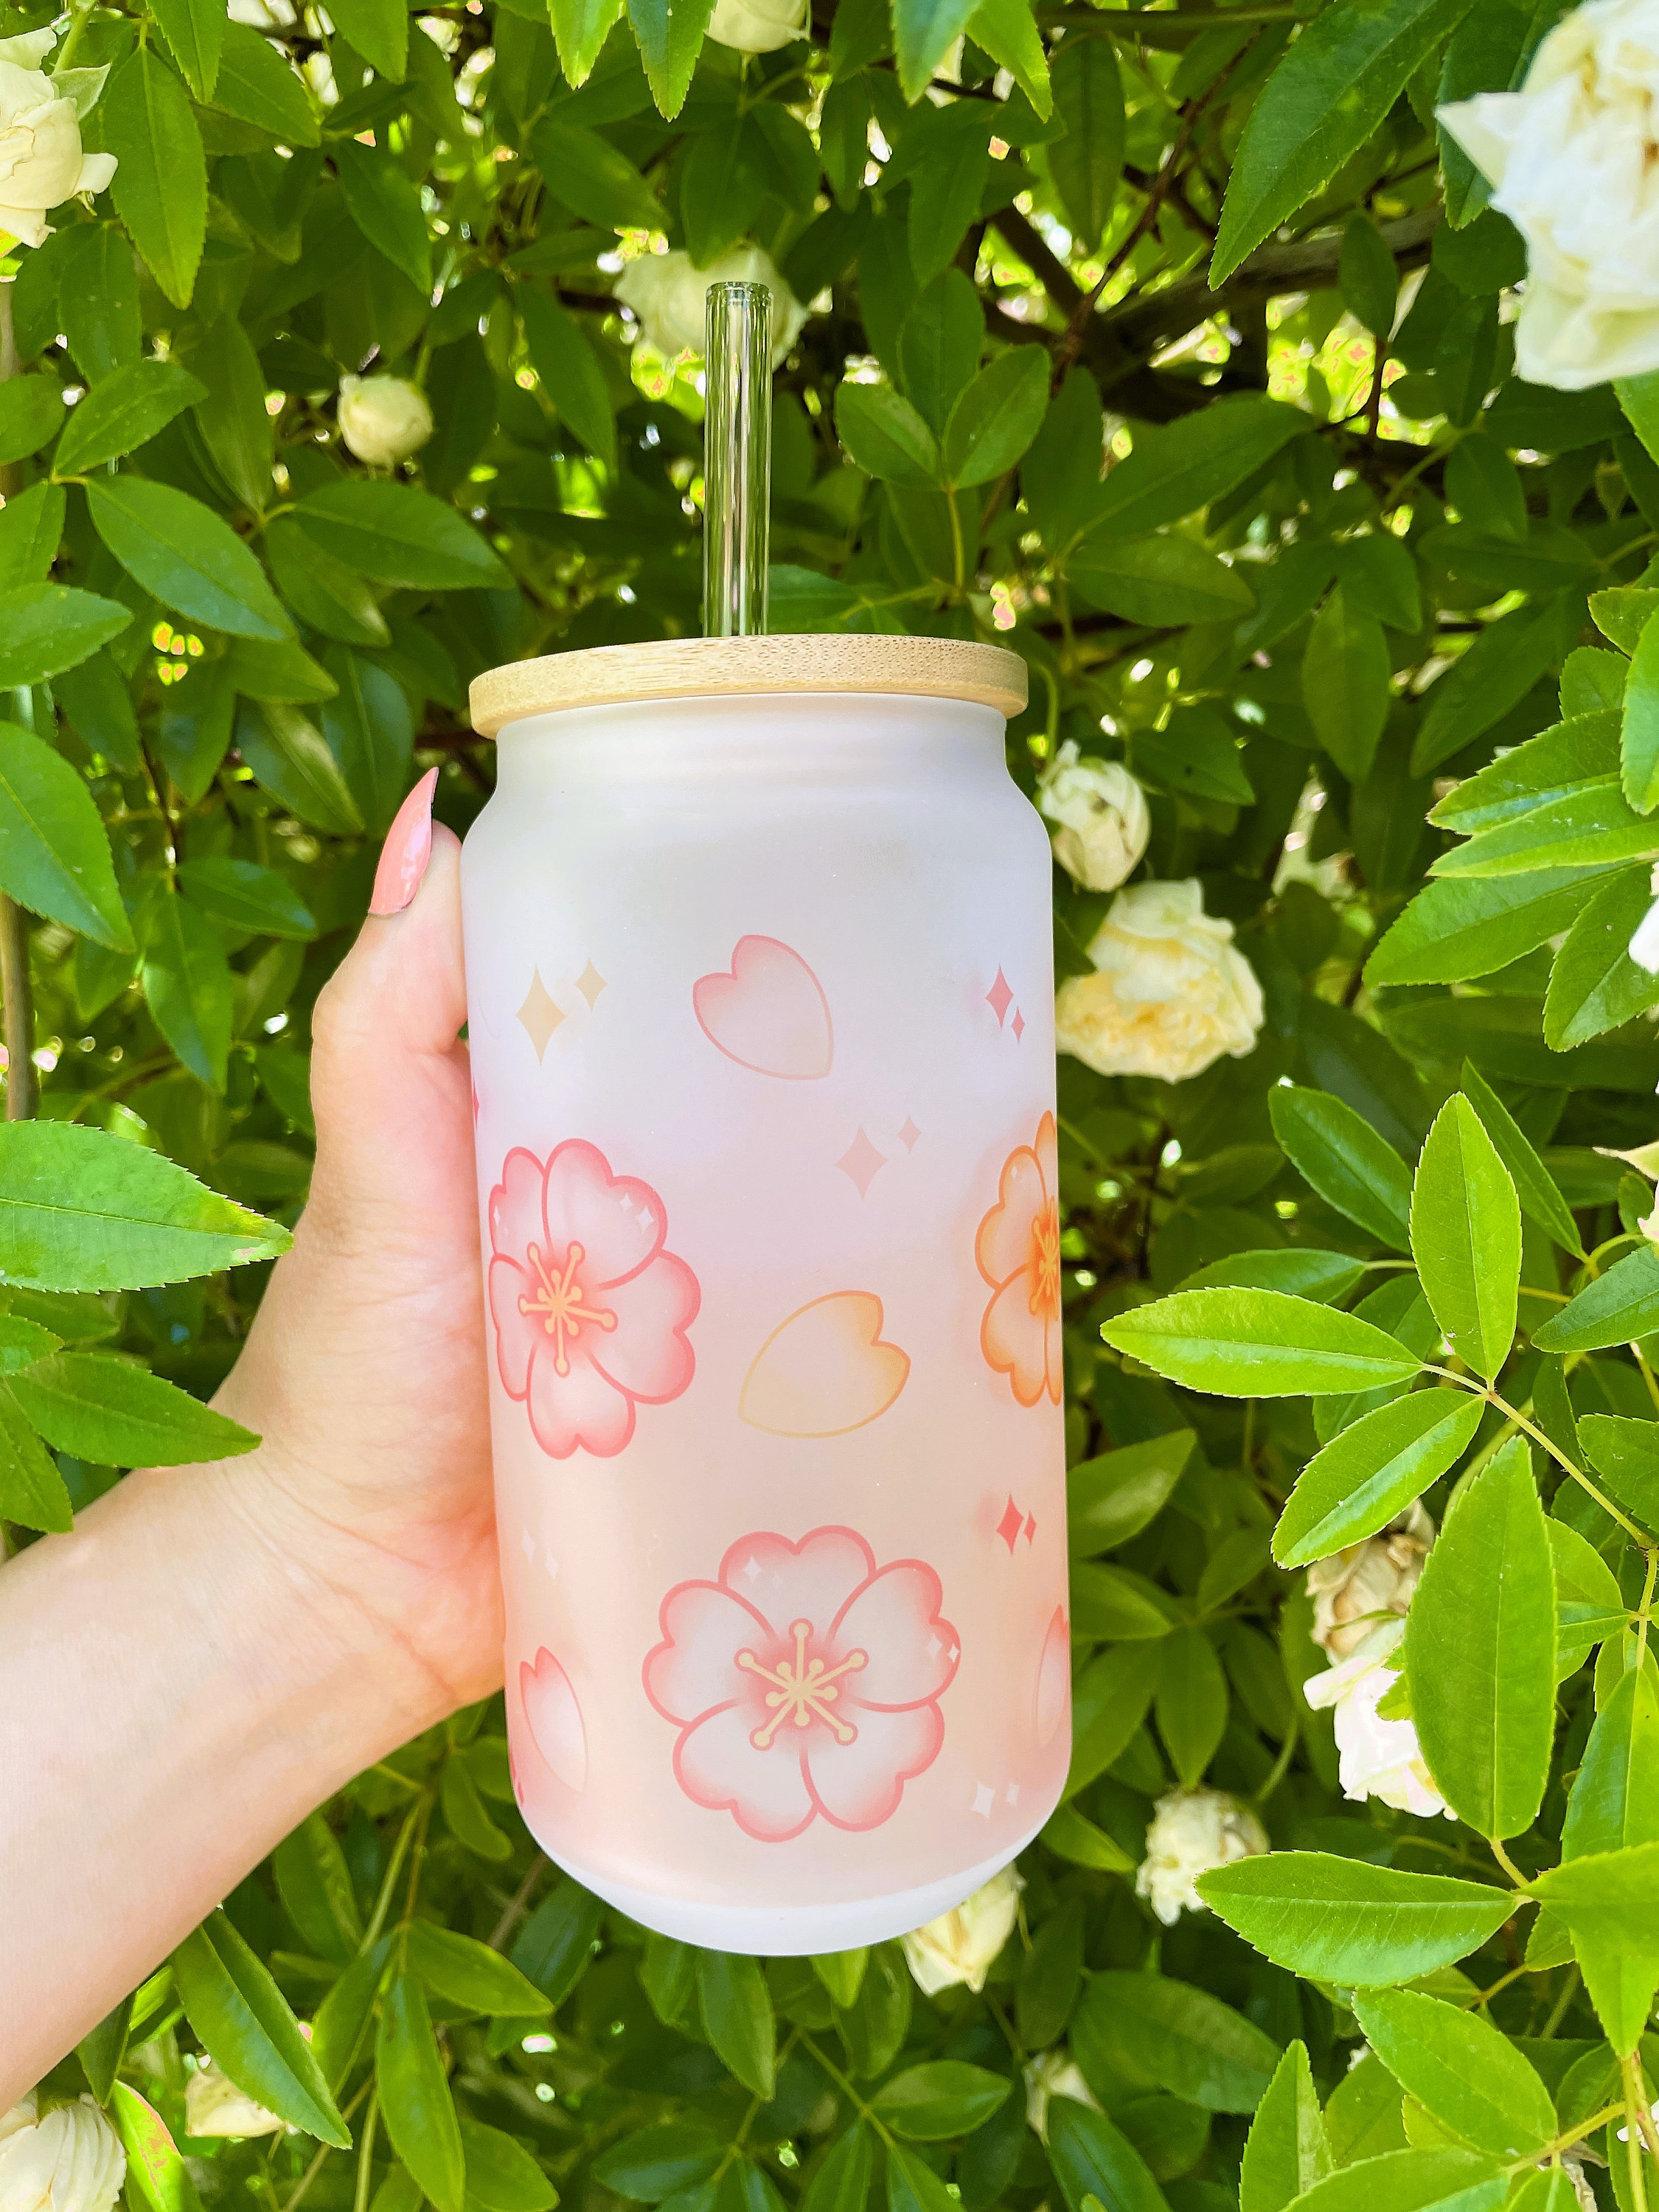 Kawaii Flower Glass Cup With Lid Straw Cute Orange Coffee Mug Milk